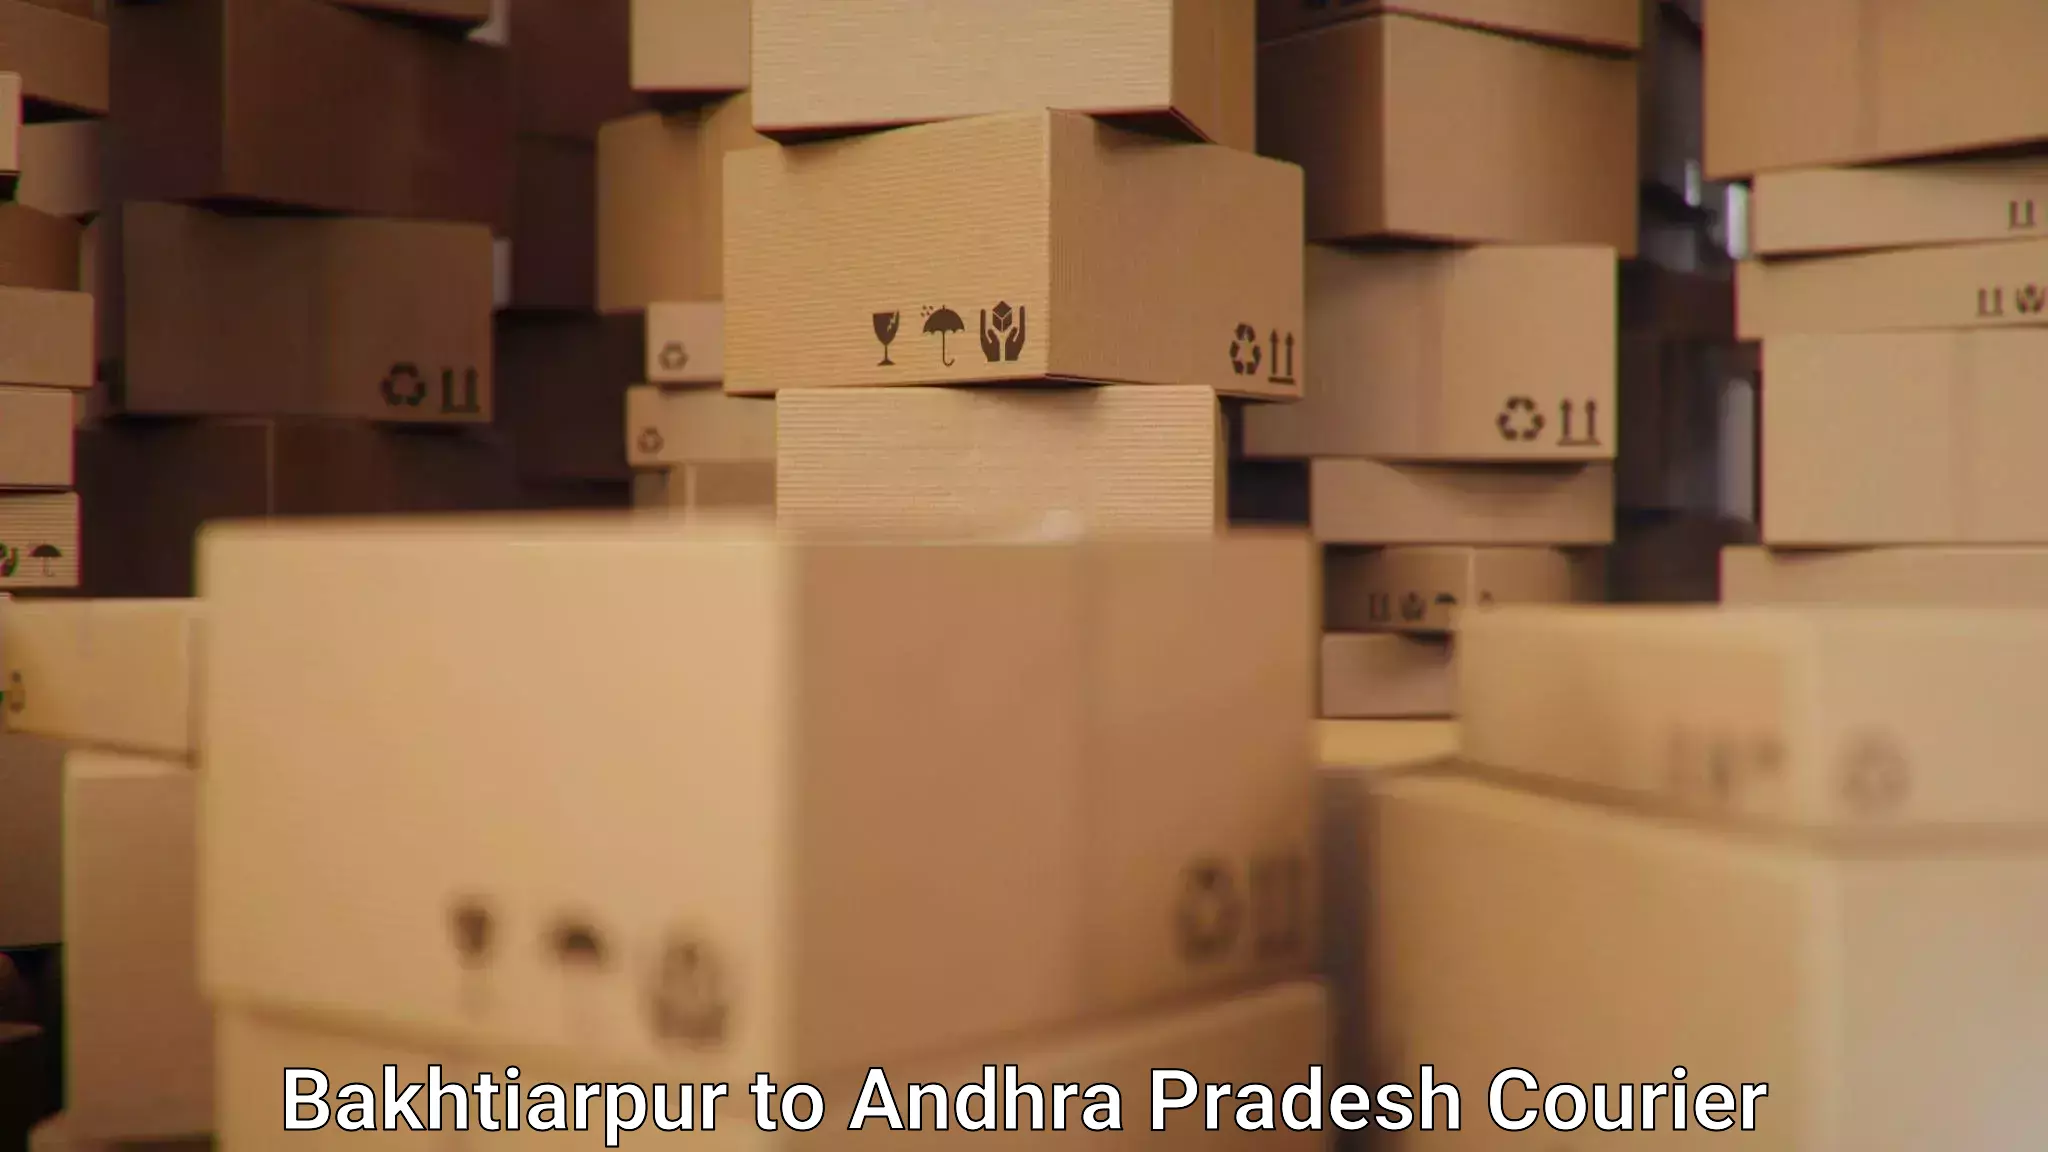 User-friendly courier app Bakhtiarpur to Andhra Pradesh